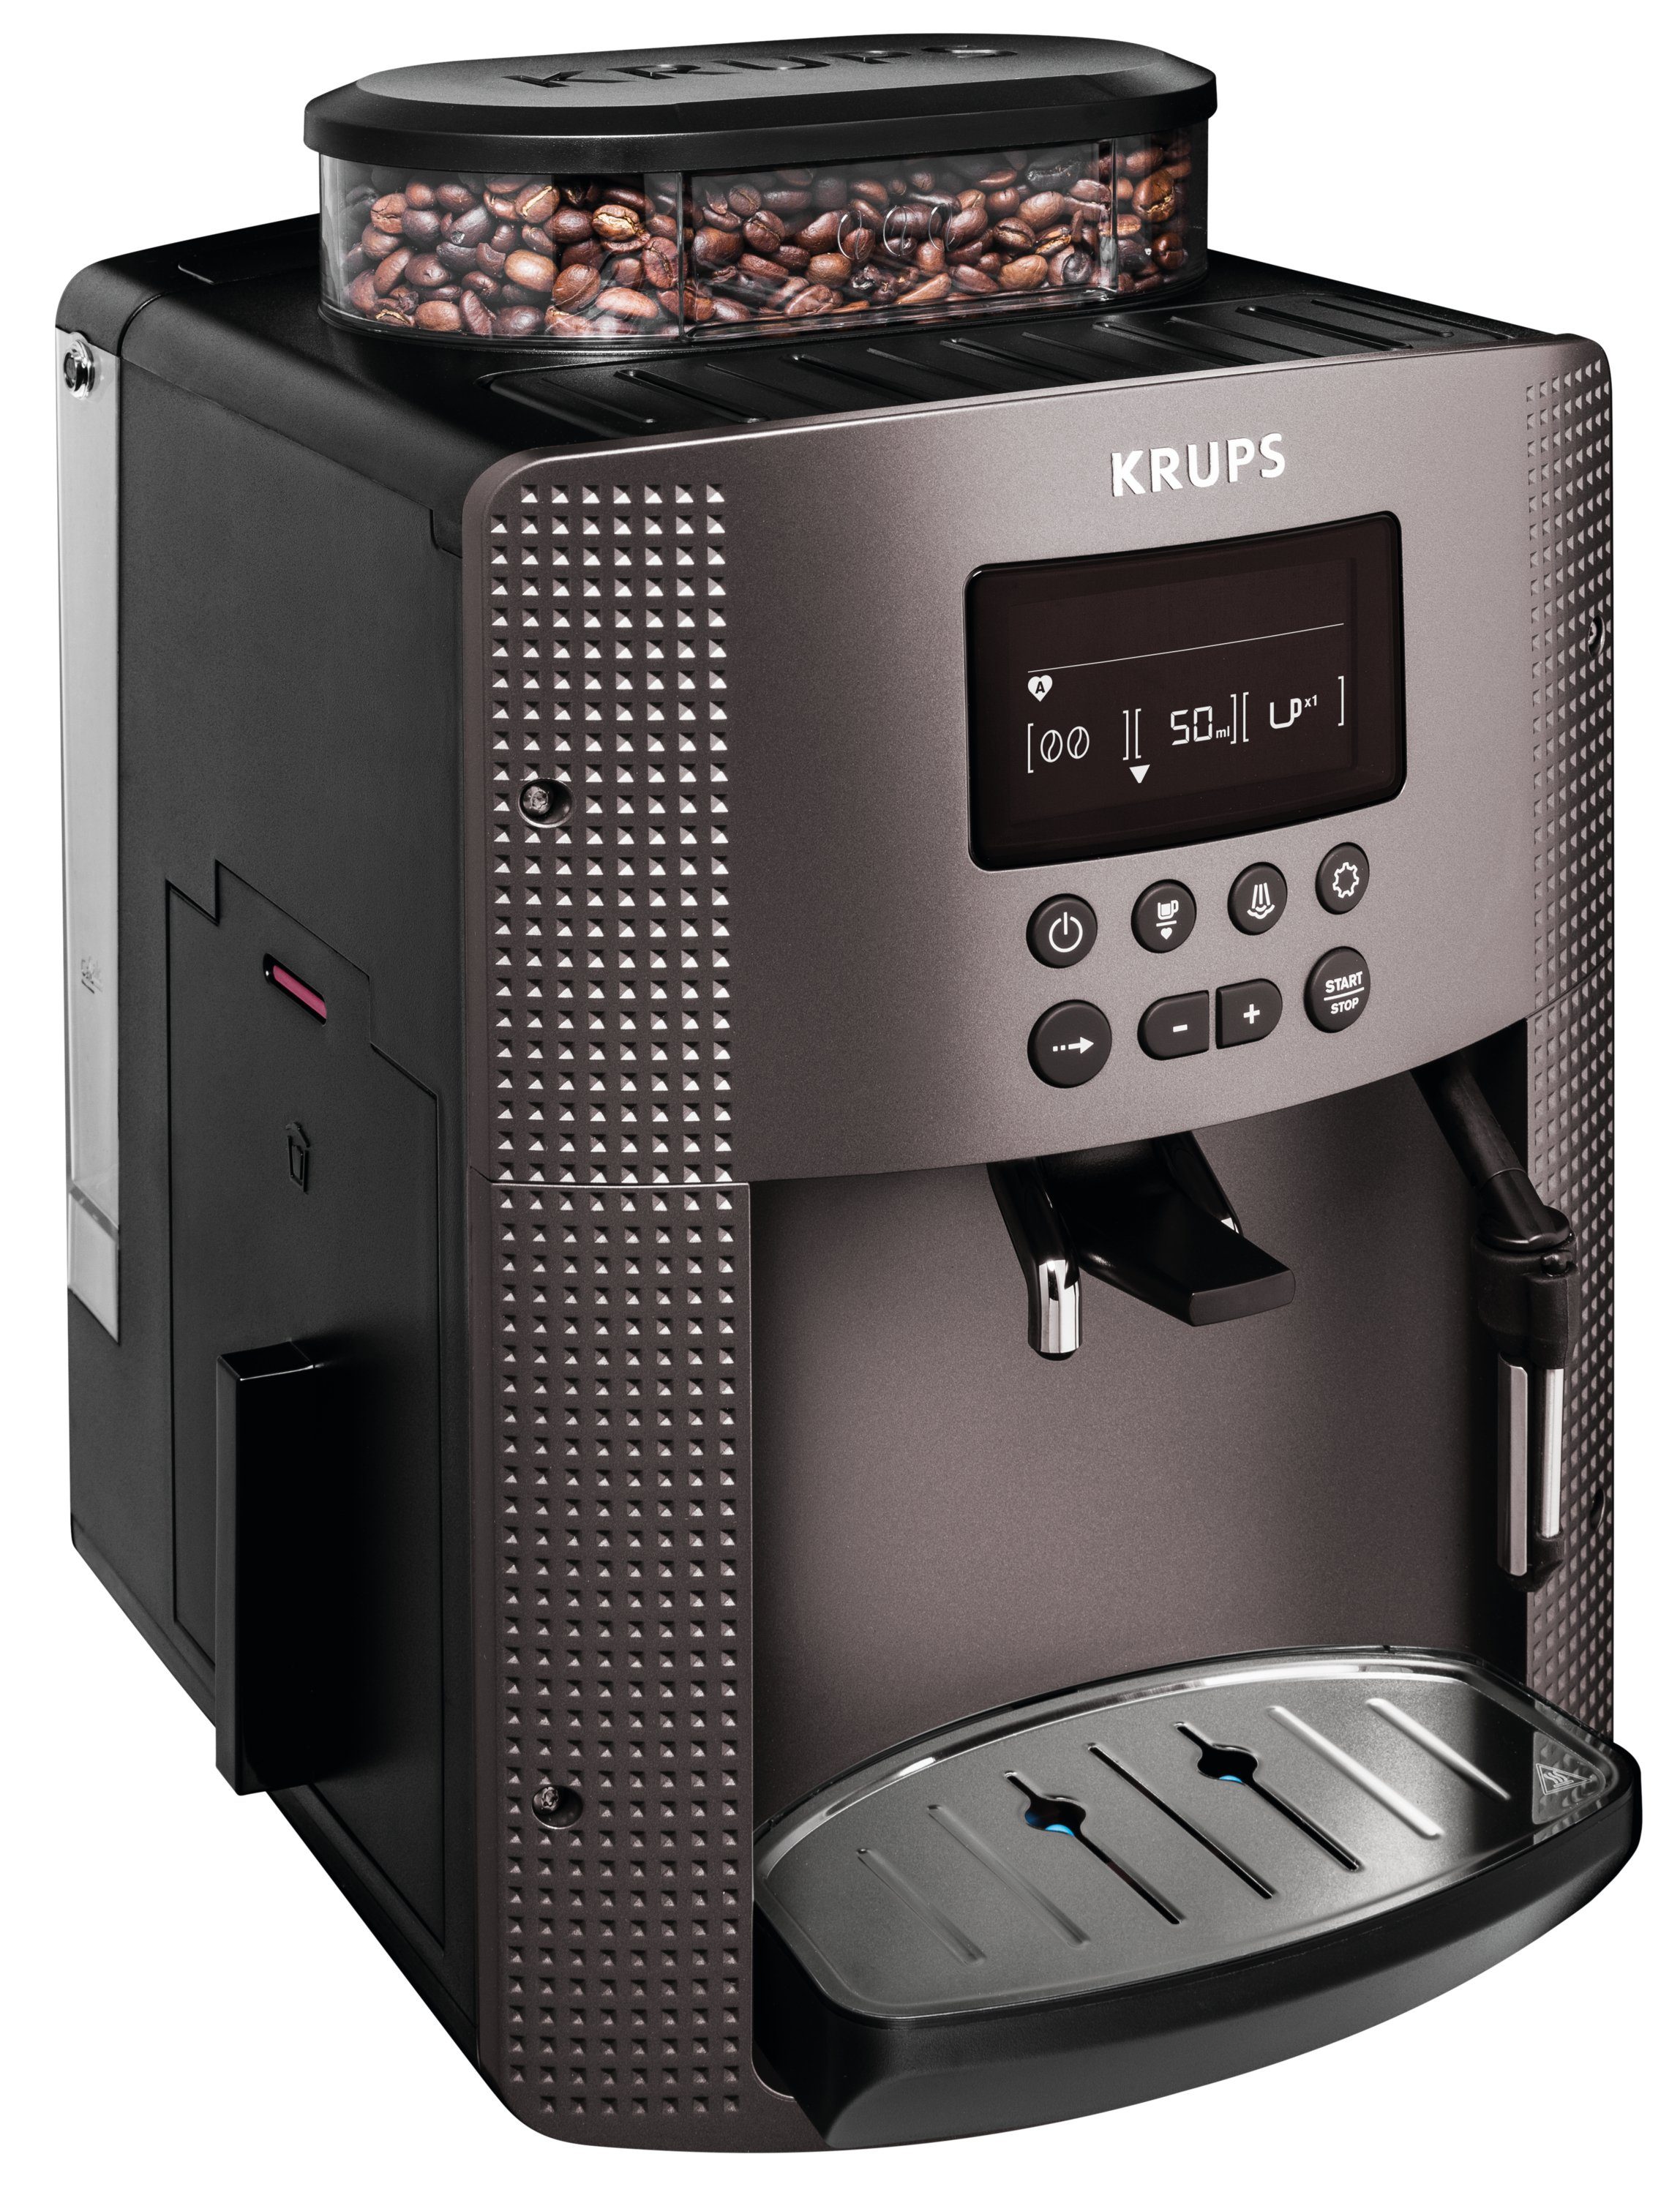 Krups Espressomaschine Kaffeevollautomat, Krups für 3 Kaffee, Cappuccino Mahlgrade Display, Espresso, EA815P LCD Kaffeekanne, Kaffee Essential 1.7l